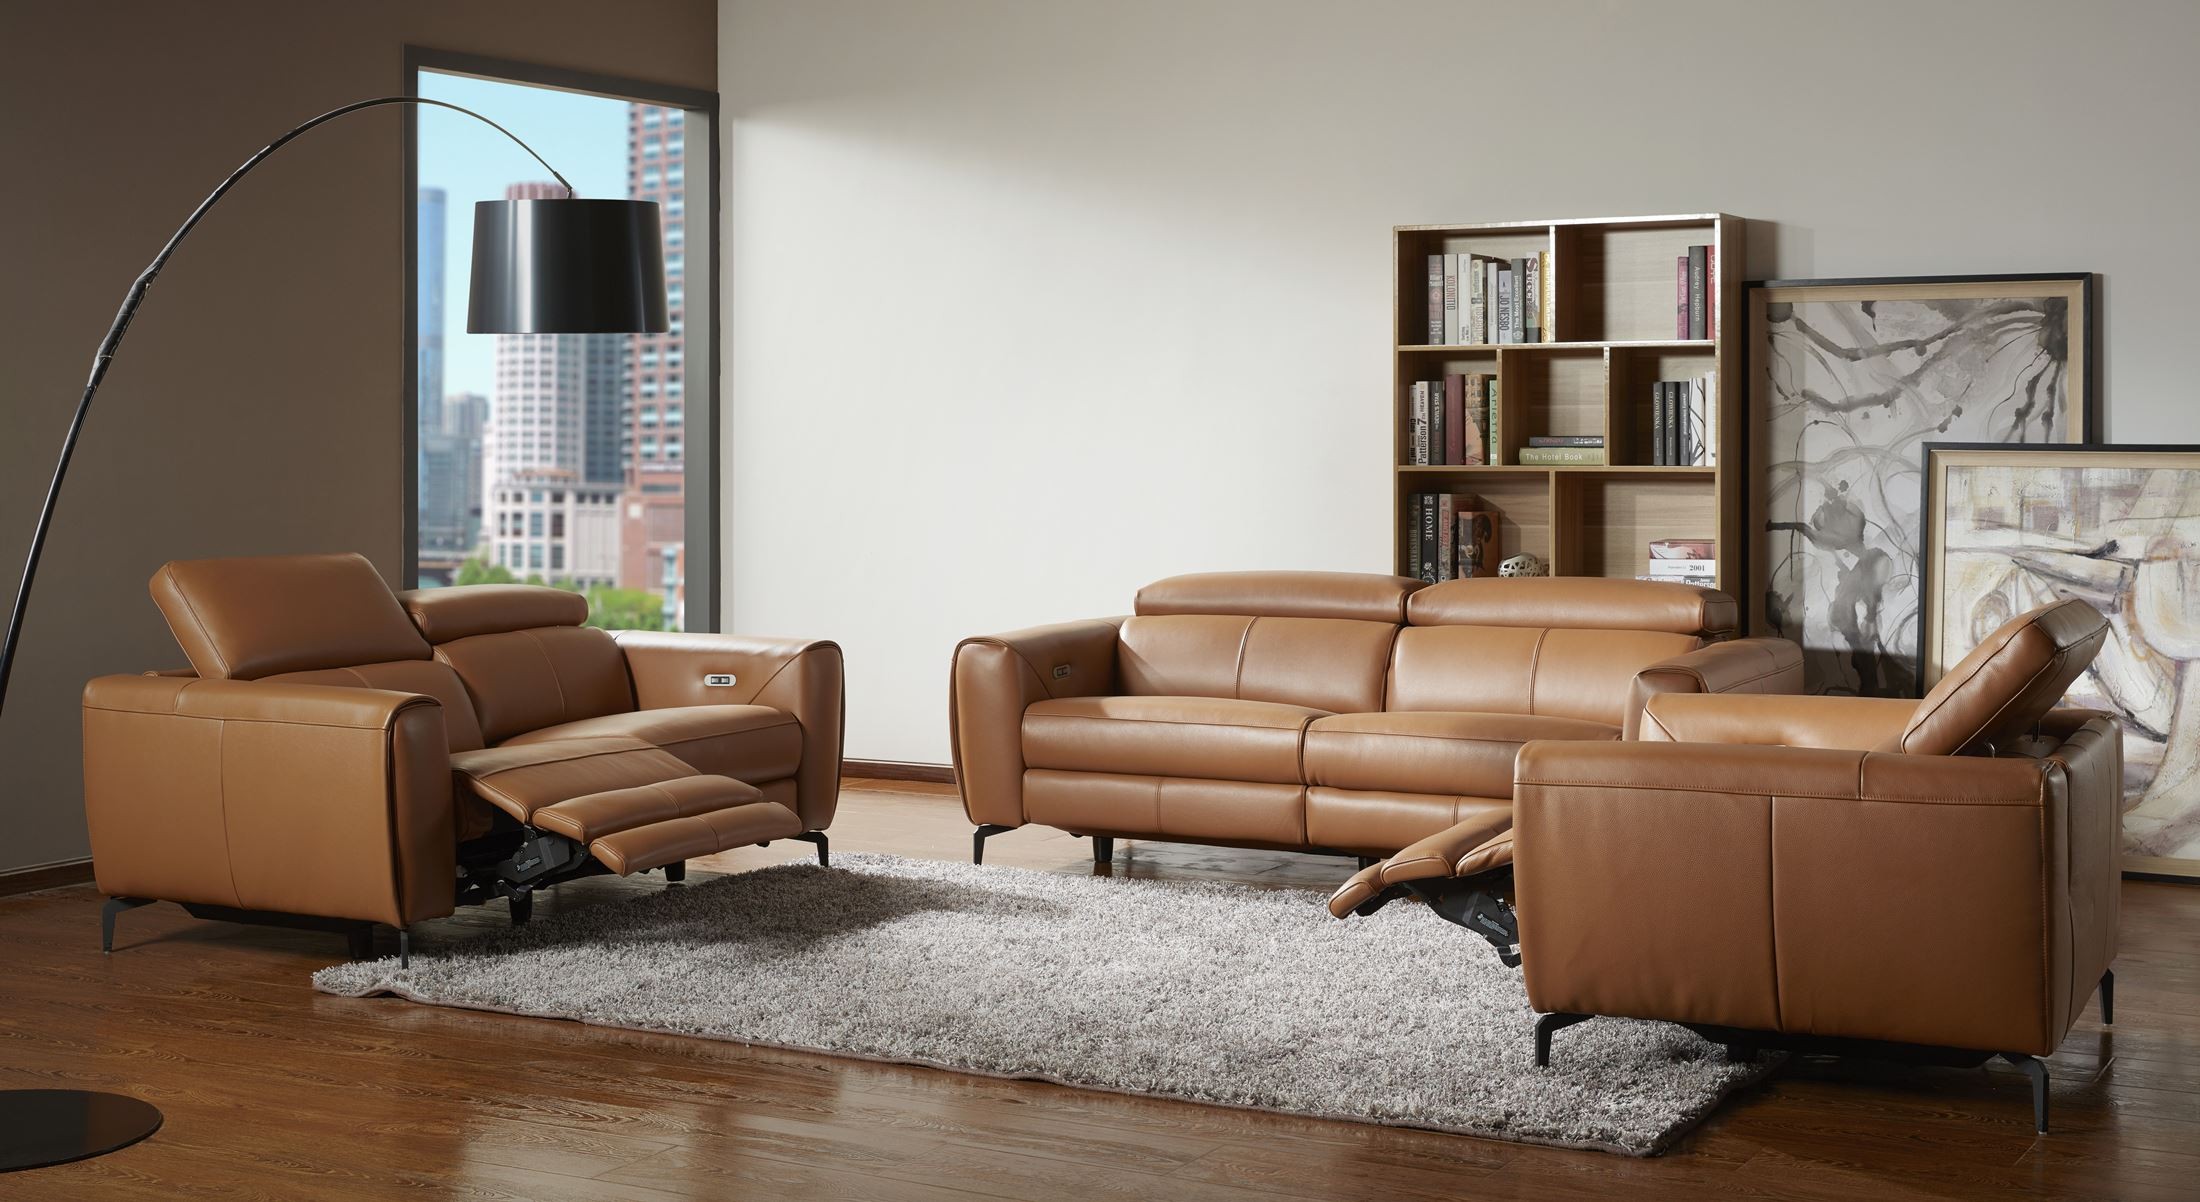 Lorenzo Caramel Leather Living Room Set, Leather Living Room Set